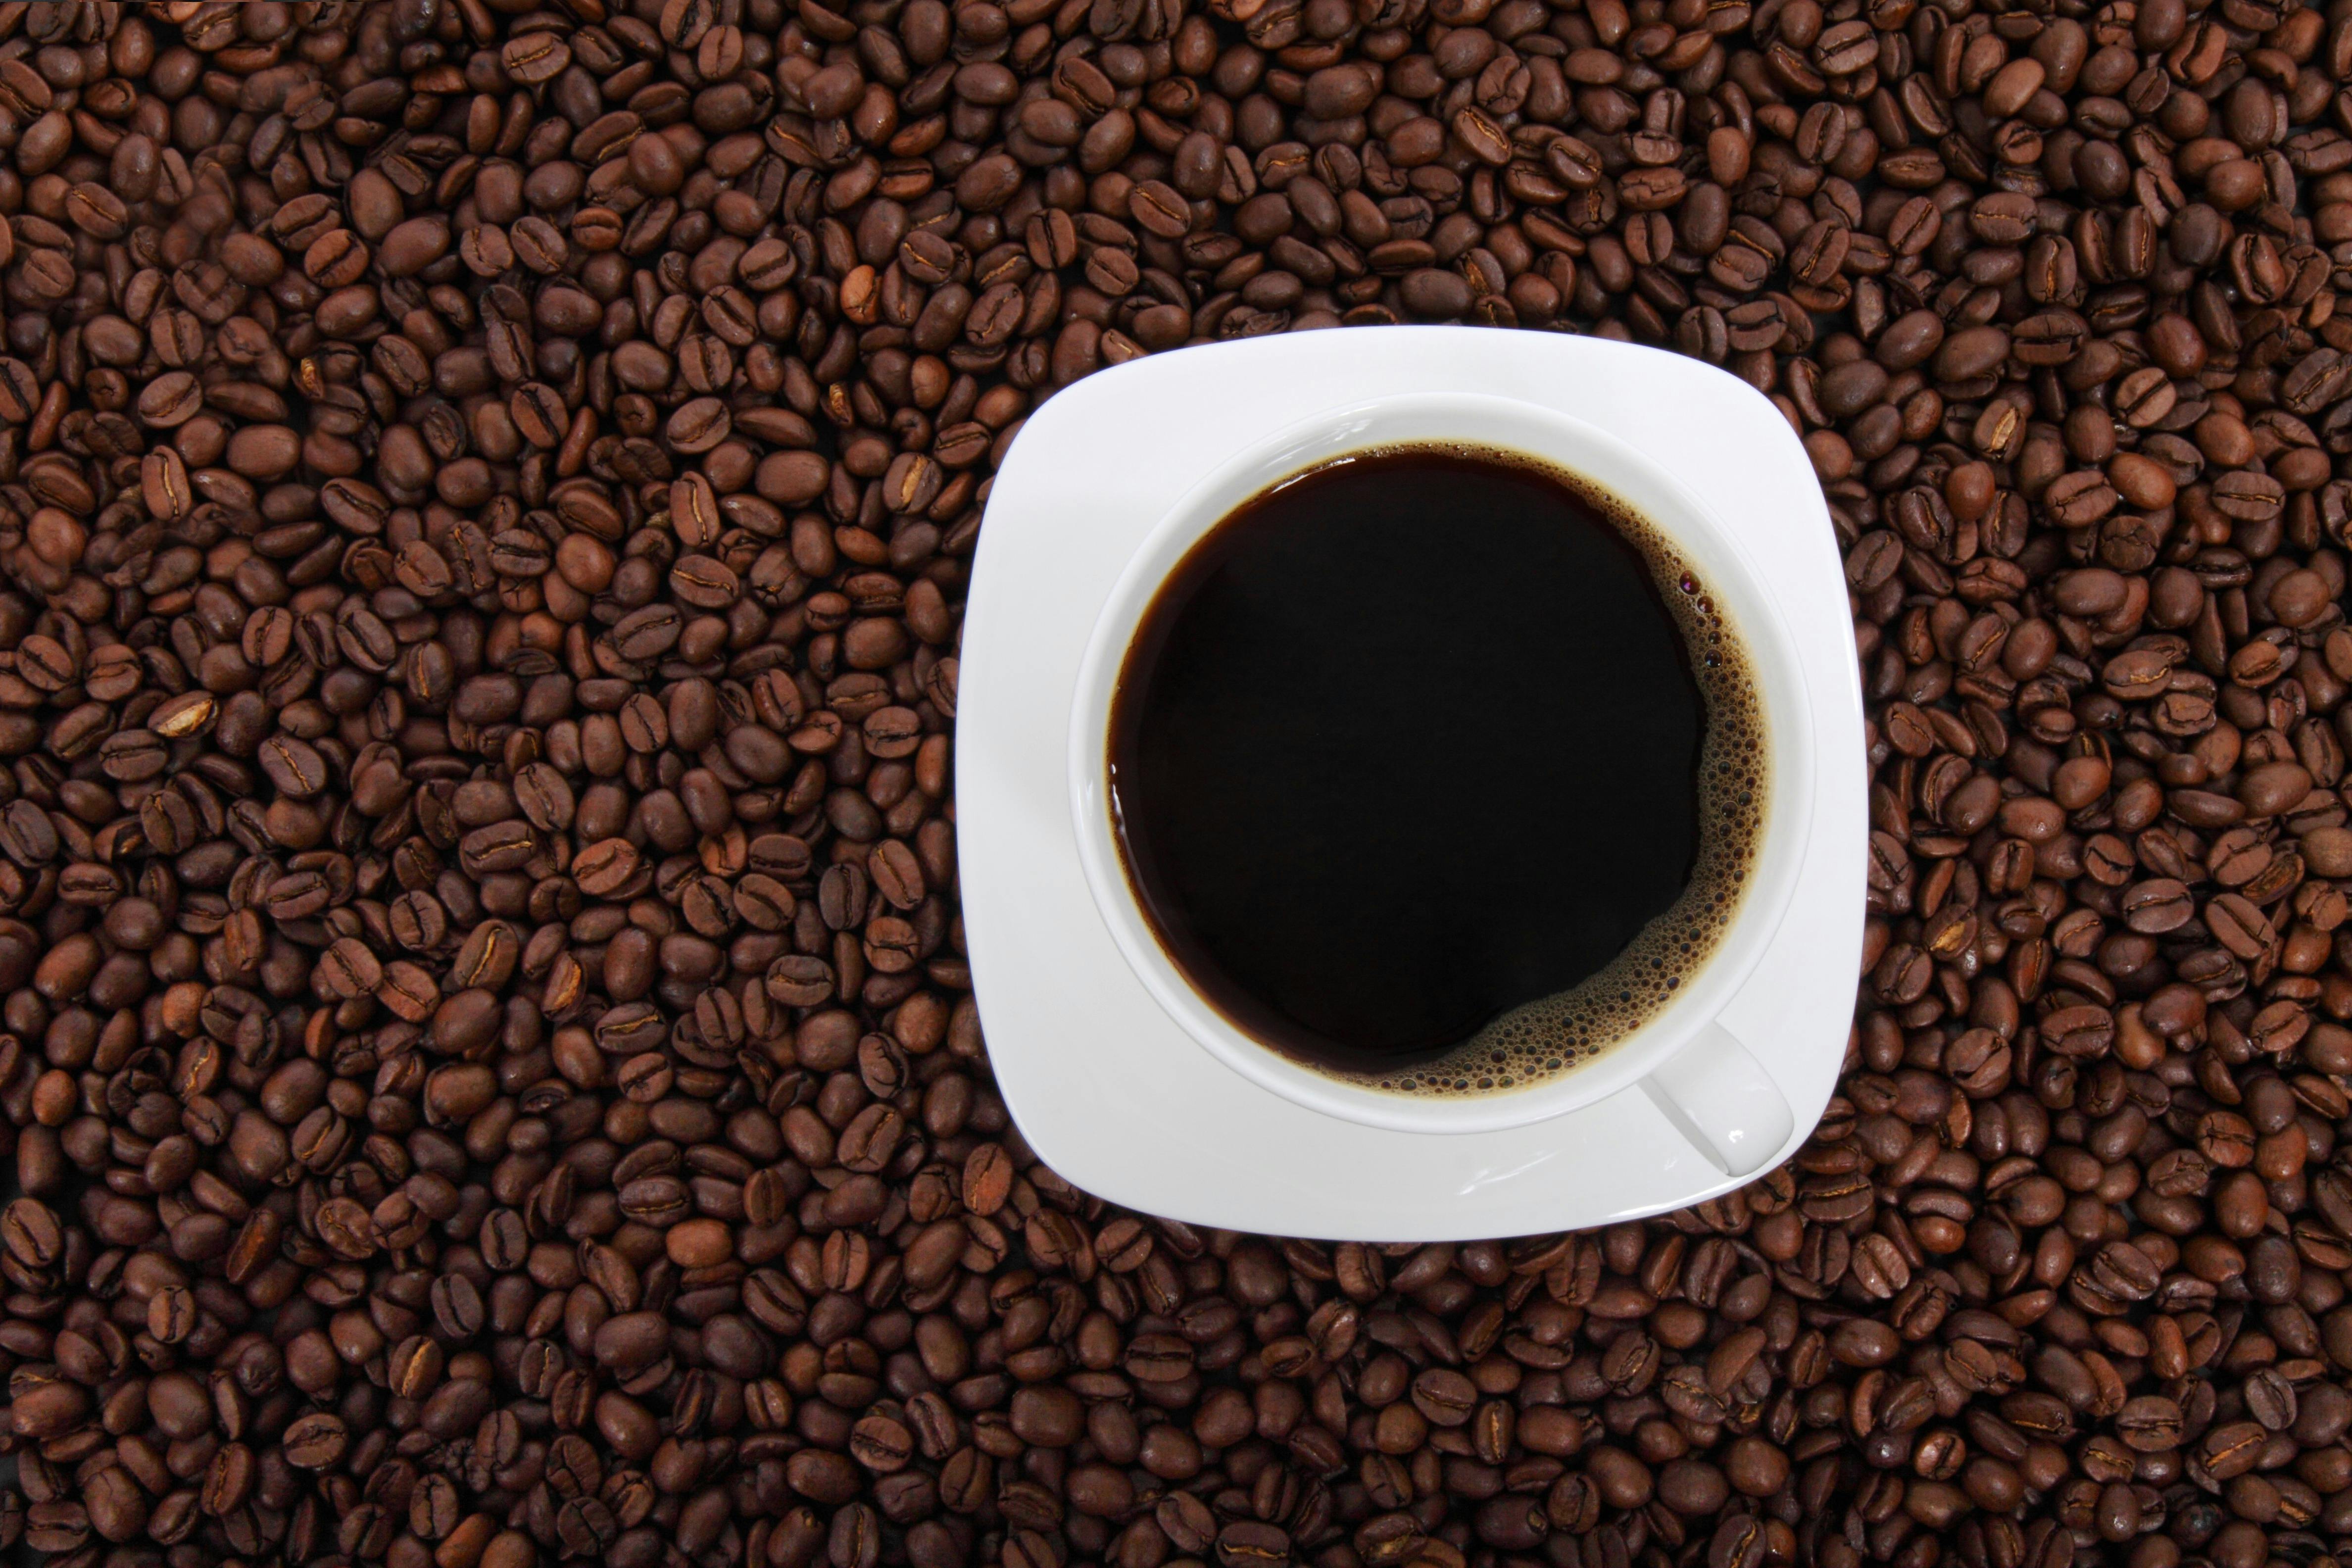  Black  Coffee  in White Ceramic Cup  Free Stock Photo